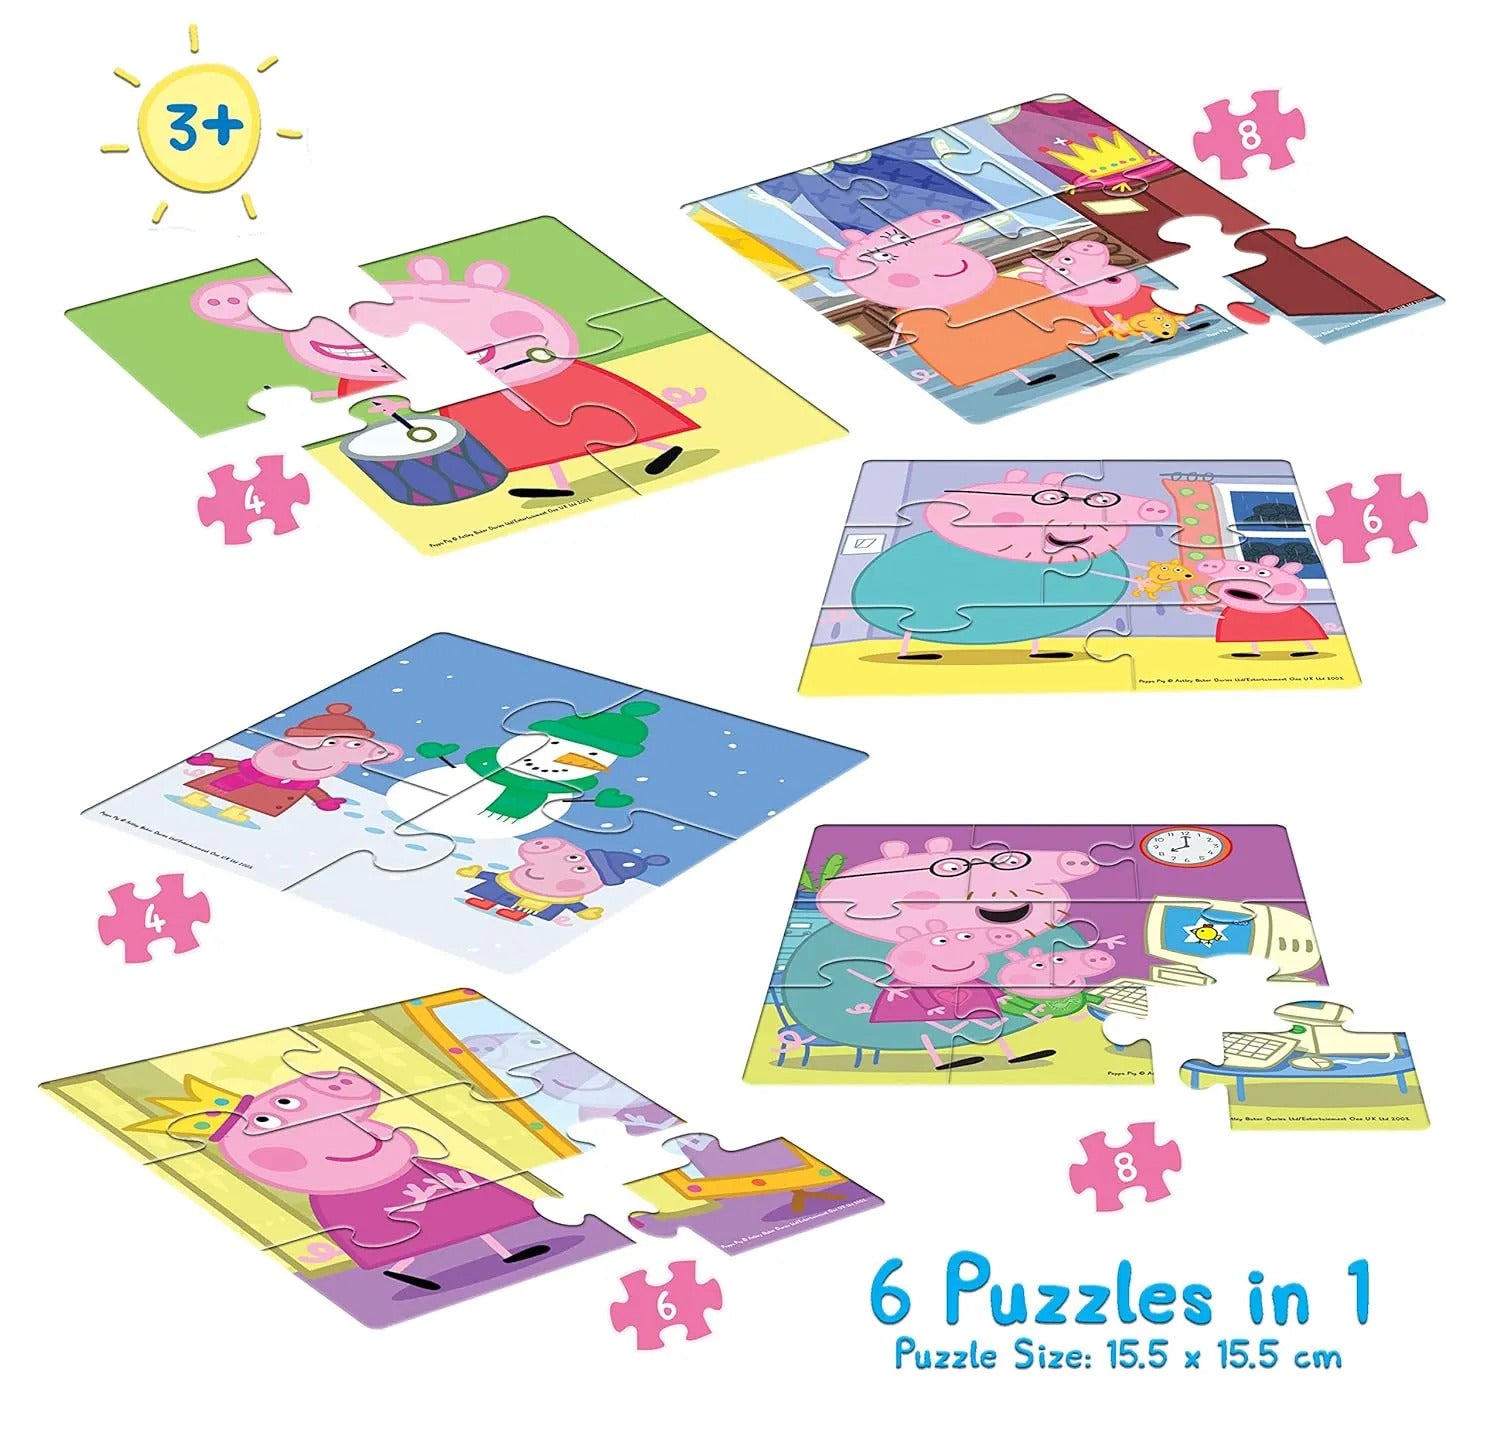 Frank 60401 Peppa Pig 6 In 1 Puzzles (3Y+)